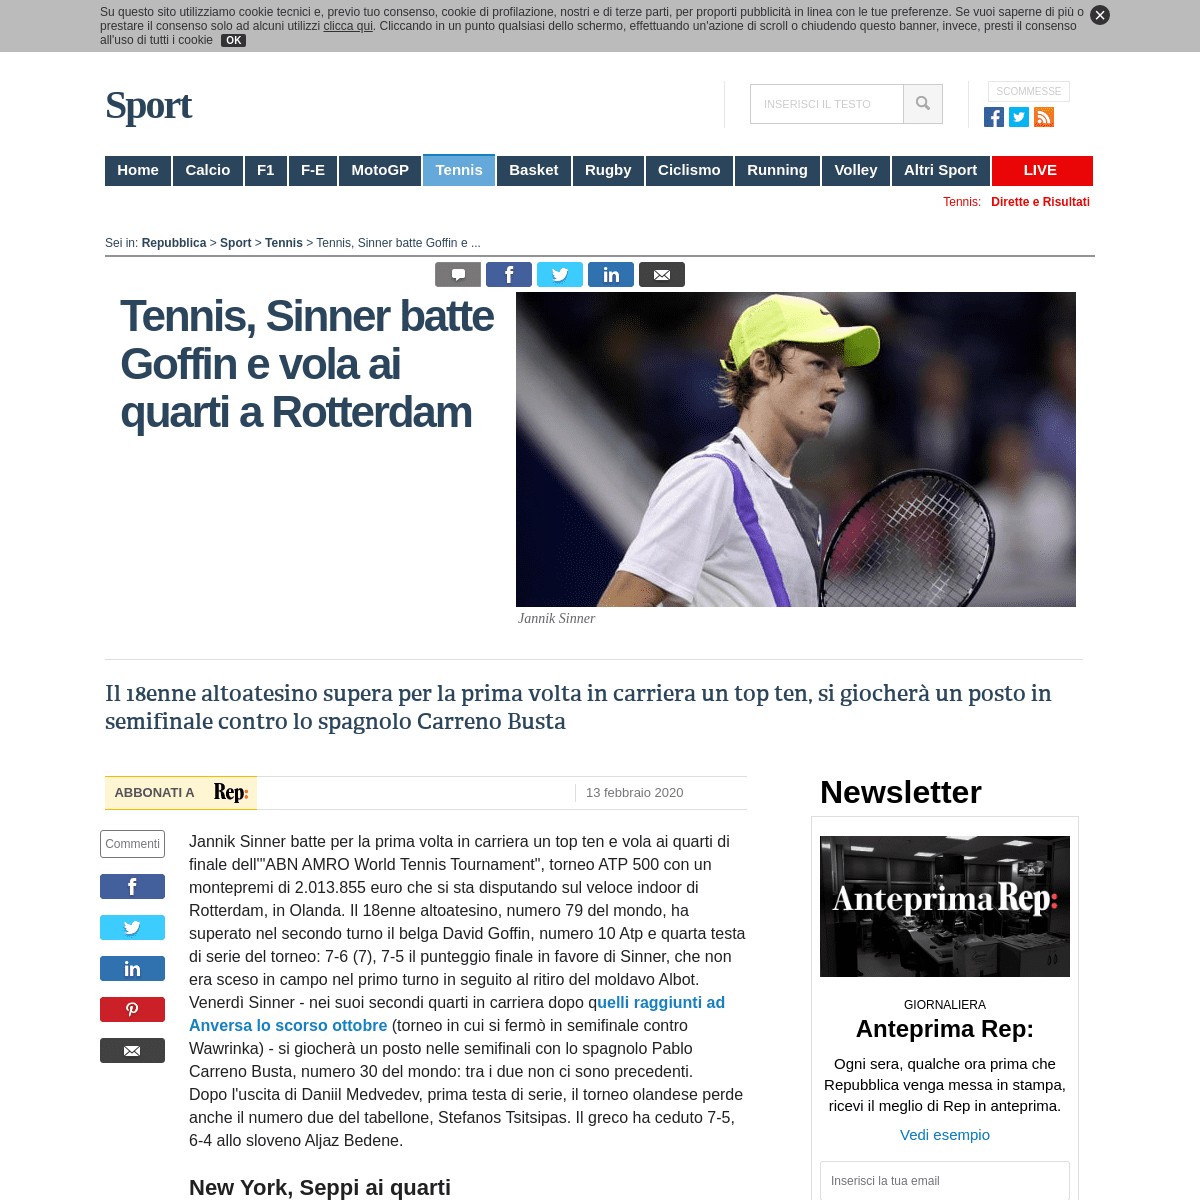 A complete backup of www.repubblica.it/sport/tennis/2020/02/13/news/sinner_ai_quarti_a_rotterdam-248495564/